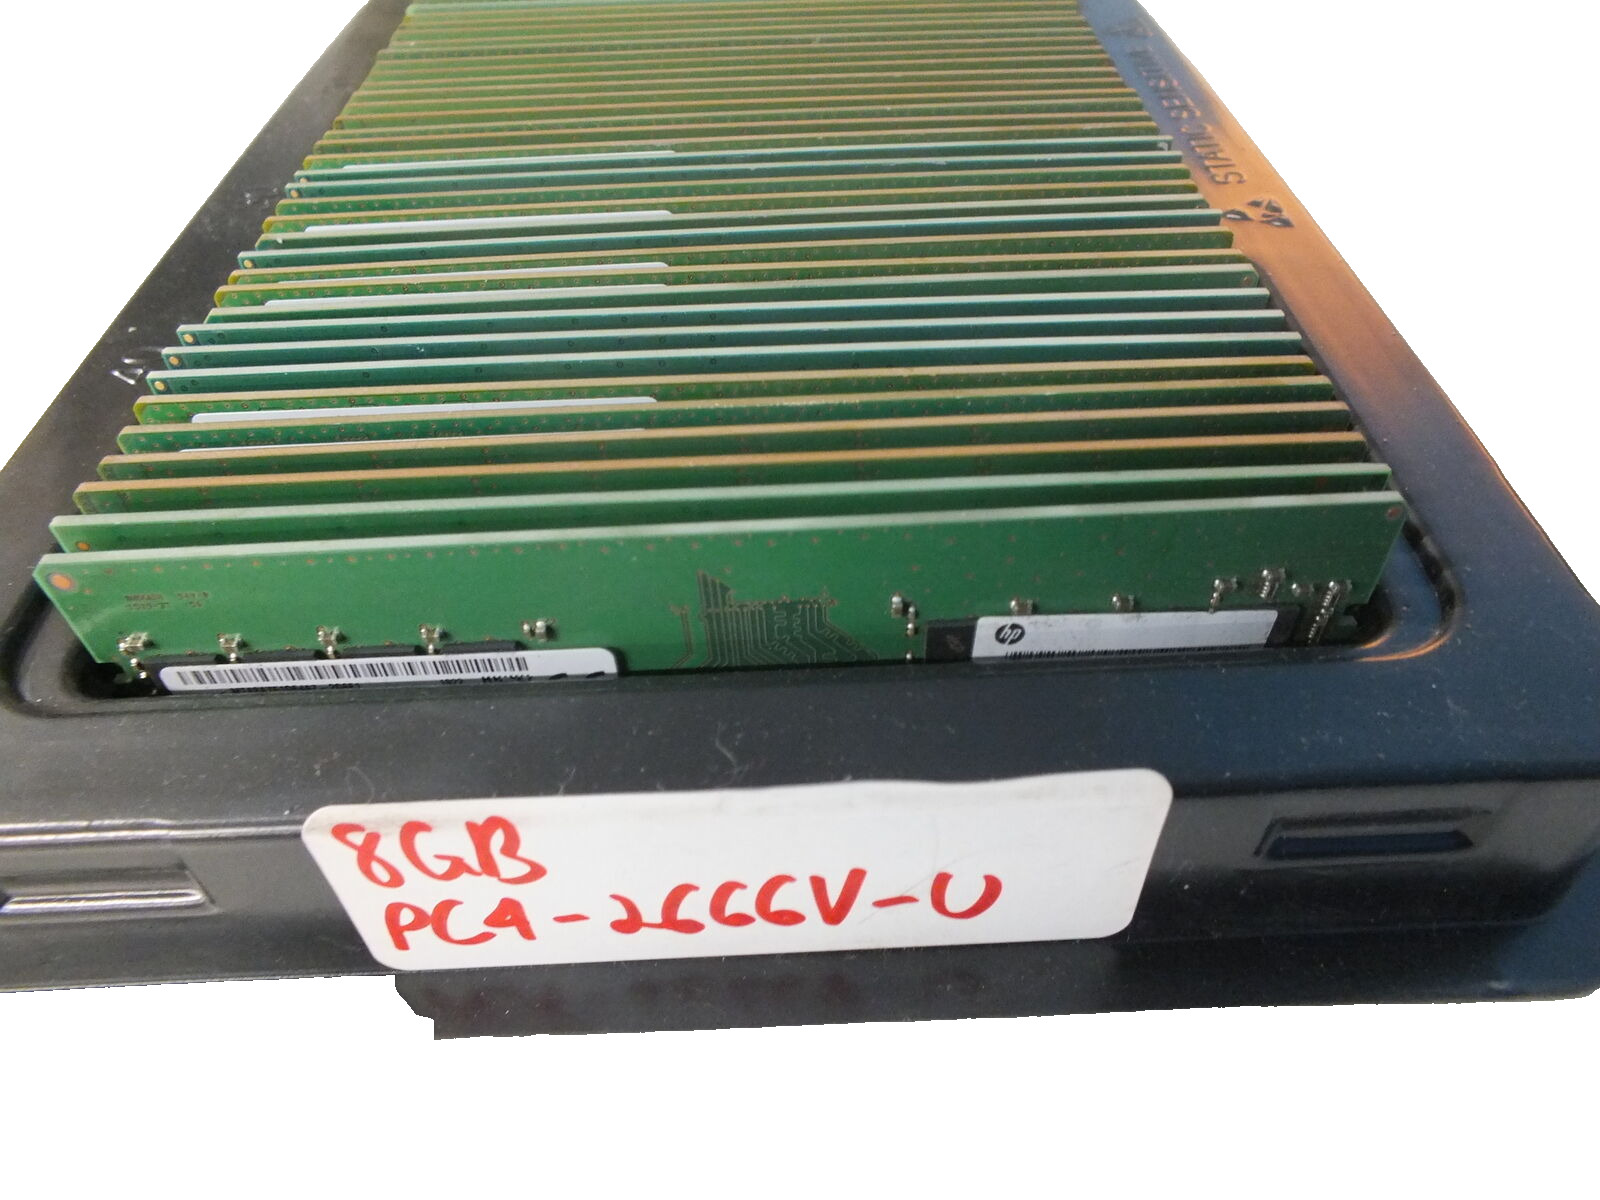 Mixed Brands 8GB PC4-2666V-U DDR4 Desktop RAM (Lot of 50)